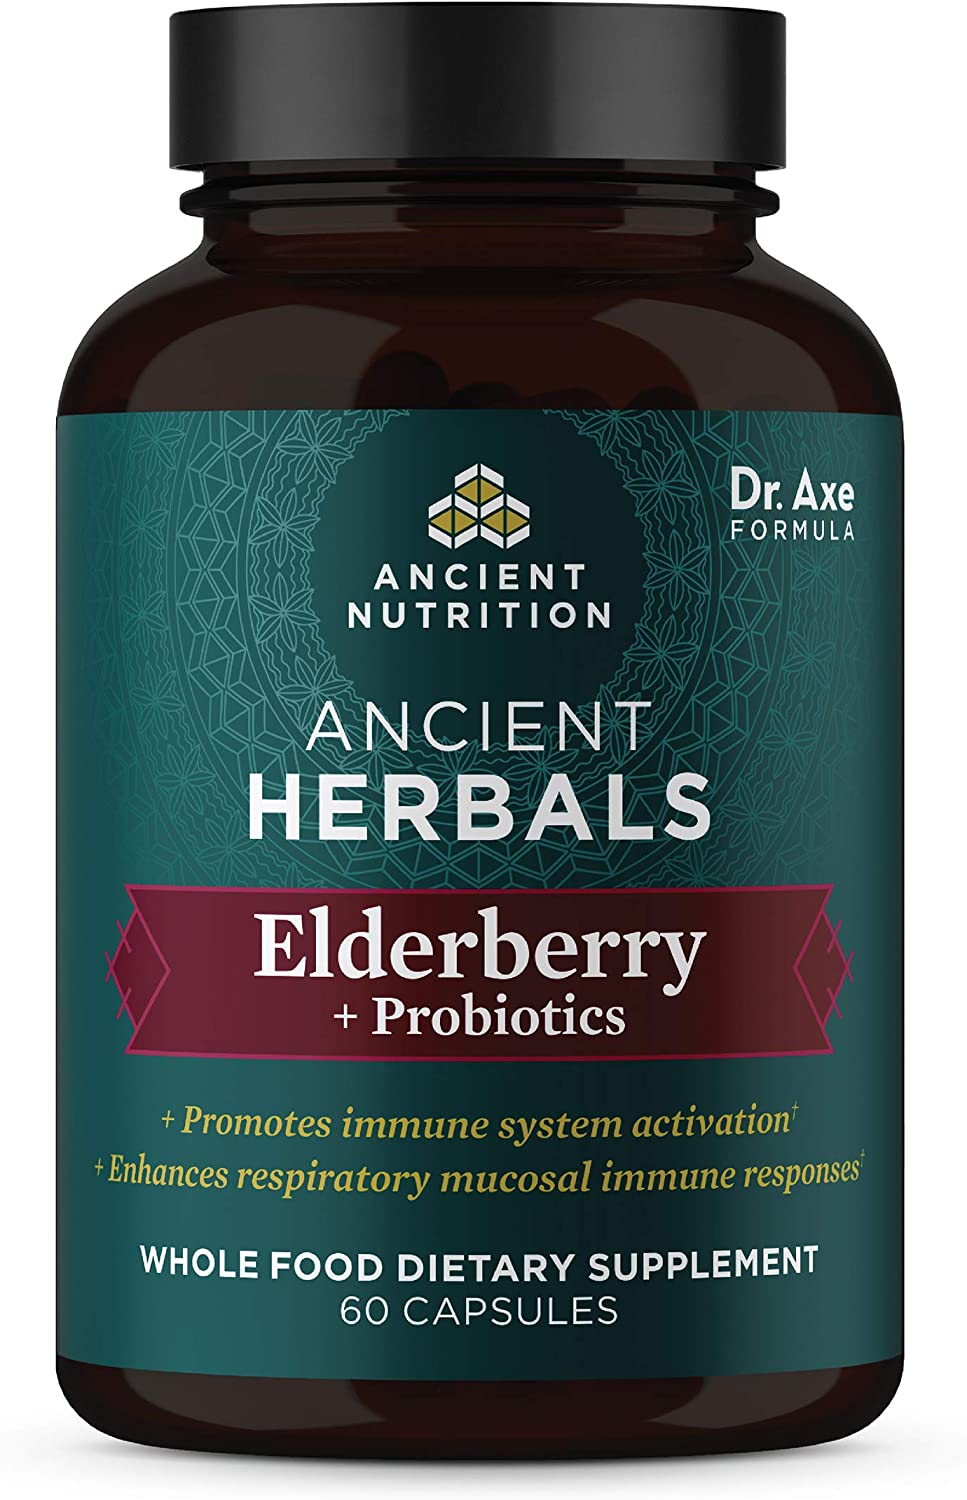 Ancient Nutrition Ancient Herbals Black Elderberry Capsules - 60 Tablet-0